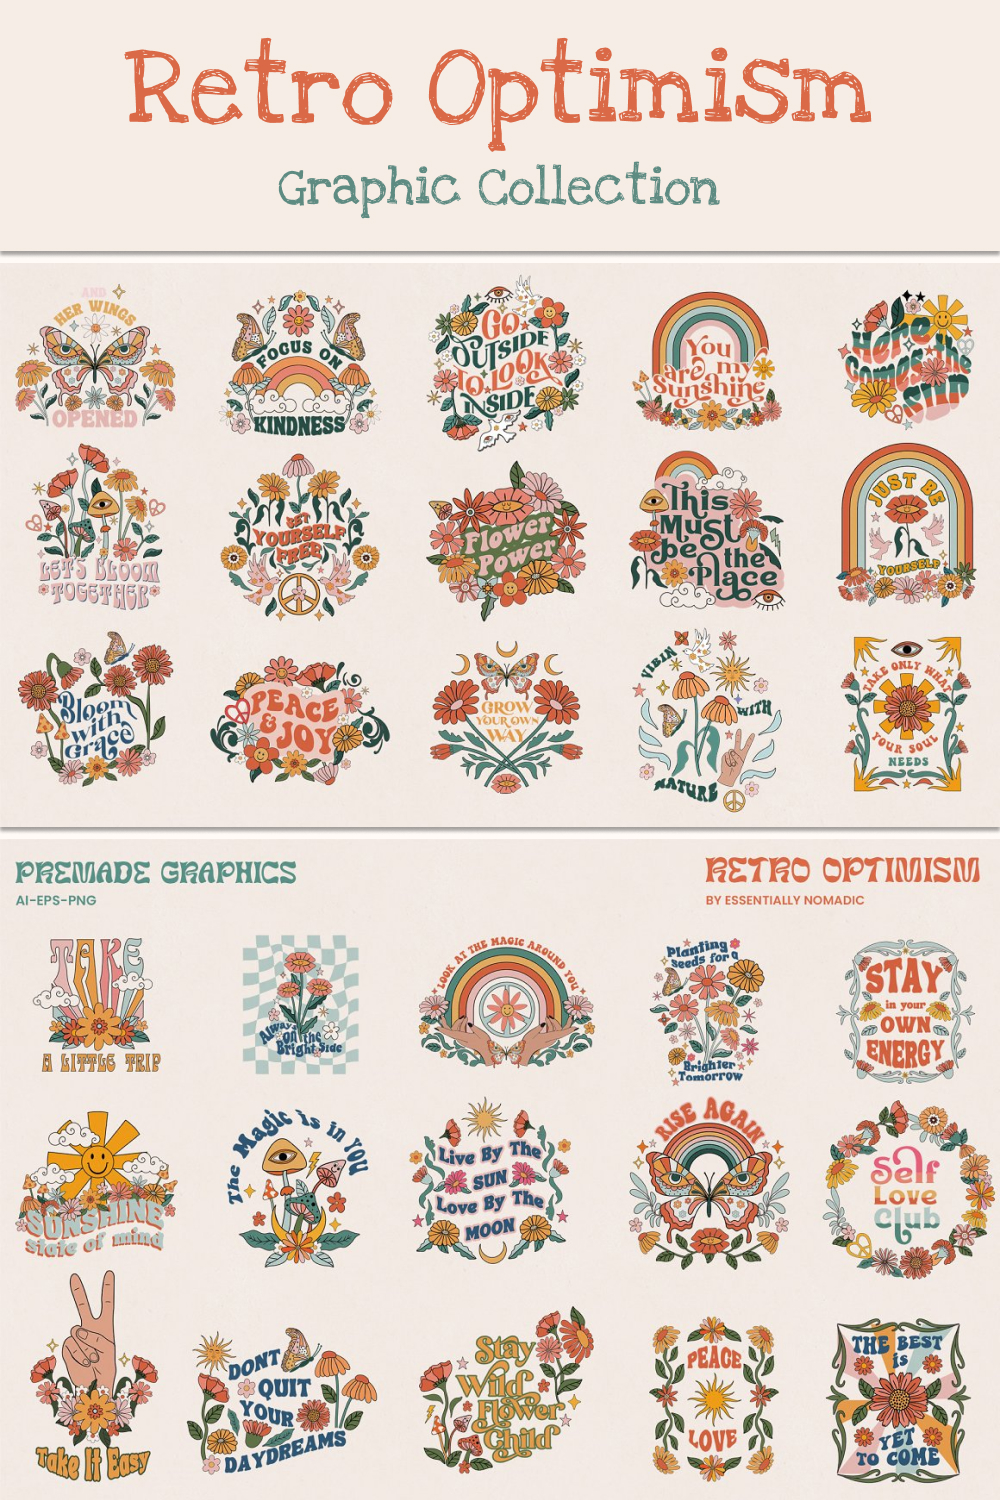 Retro optimism graphic collection of pinterest.